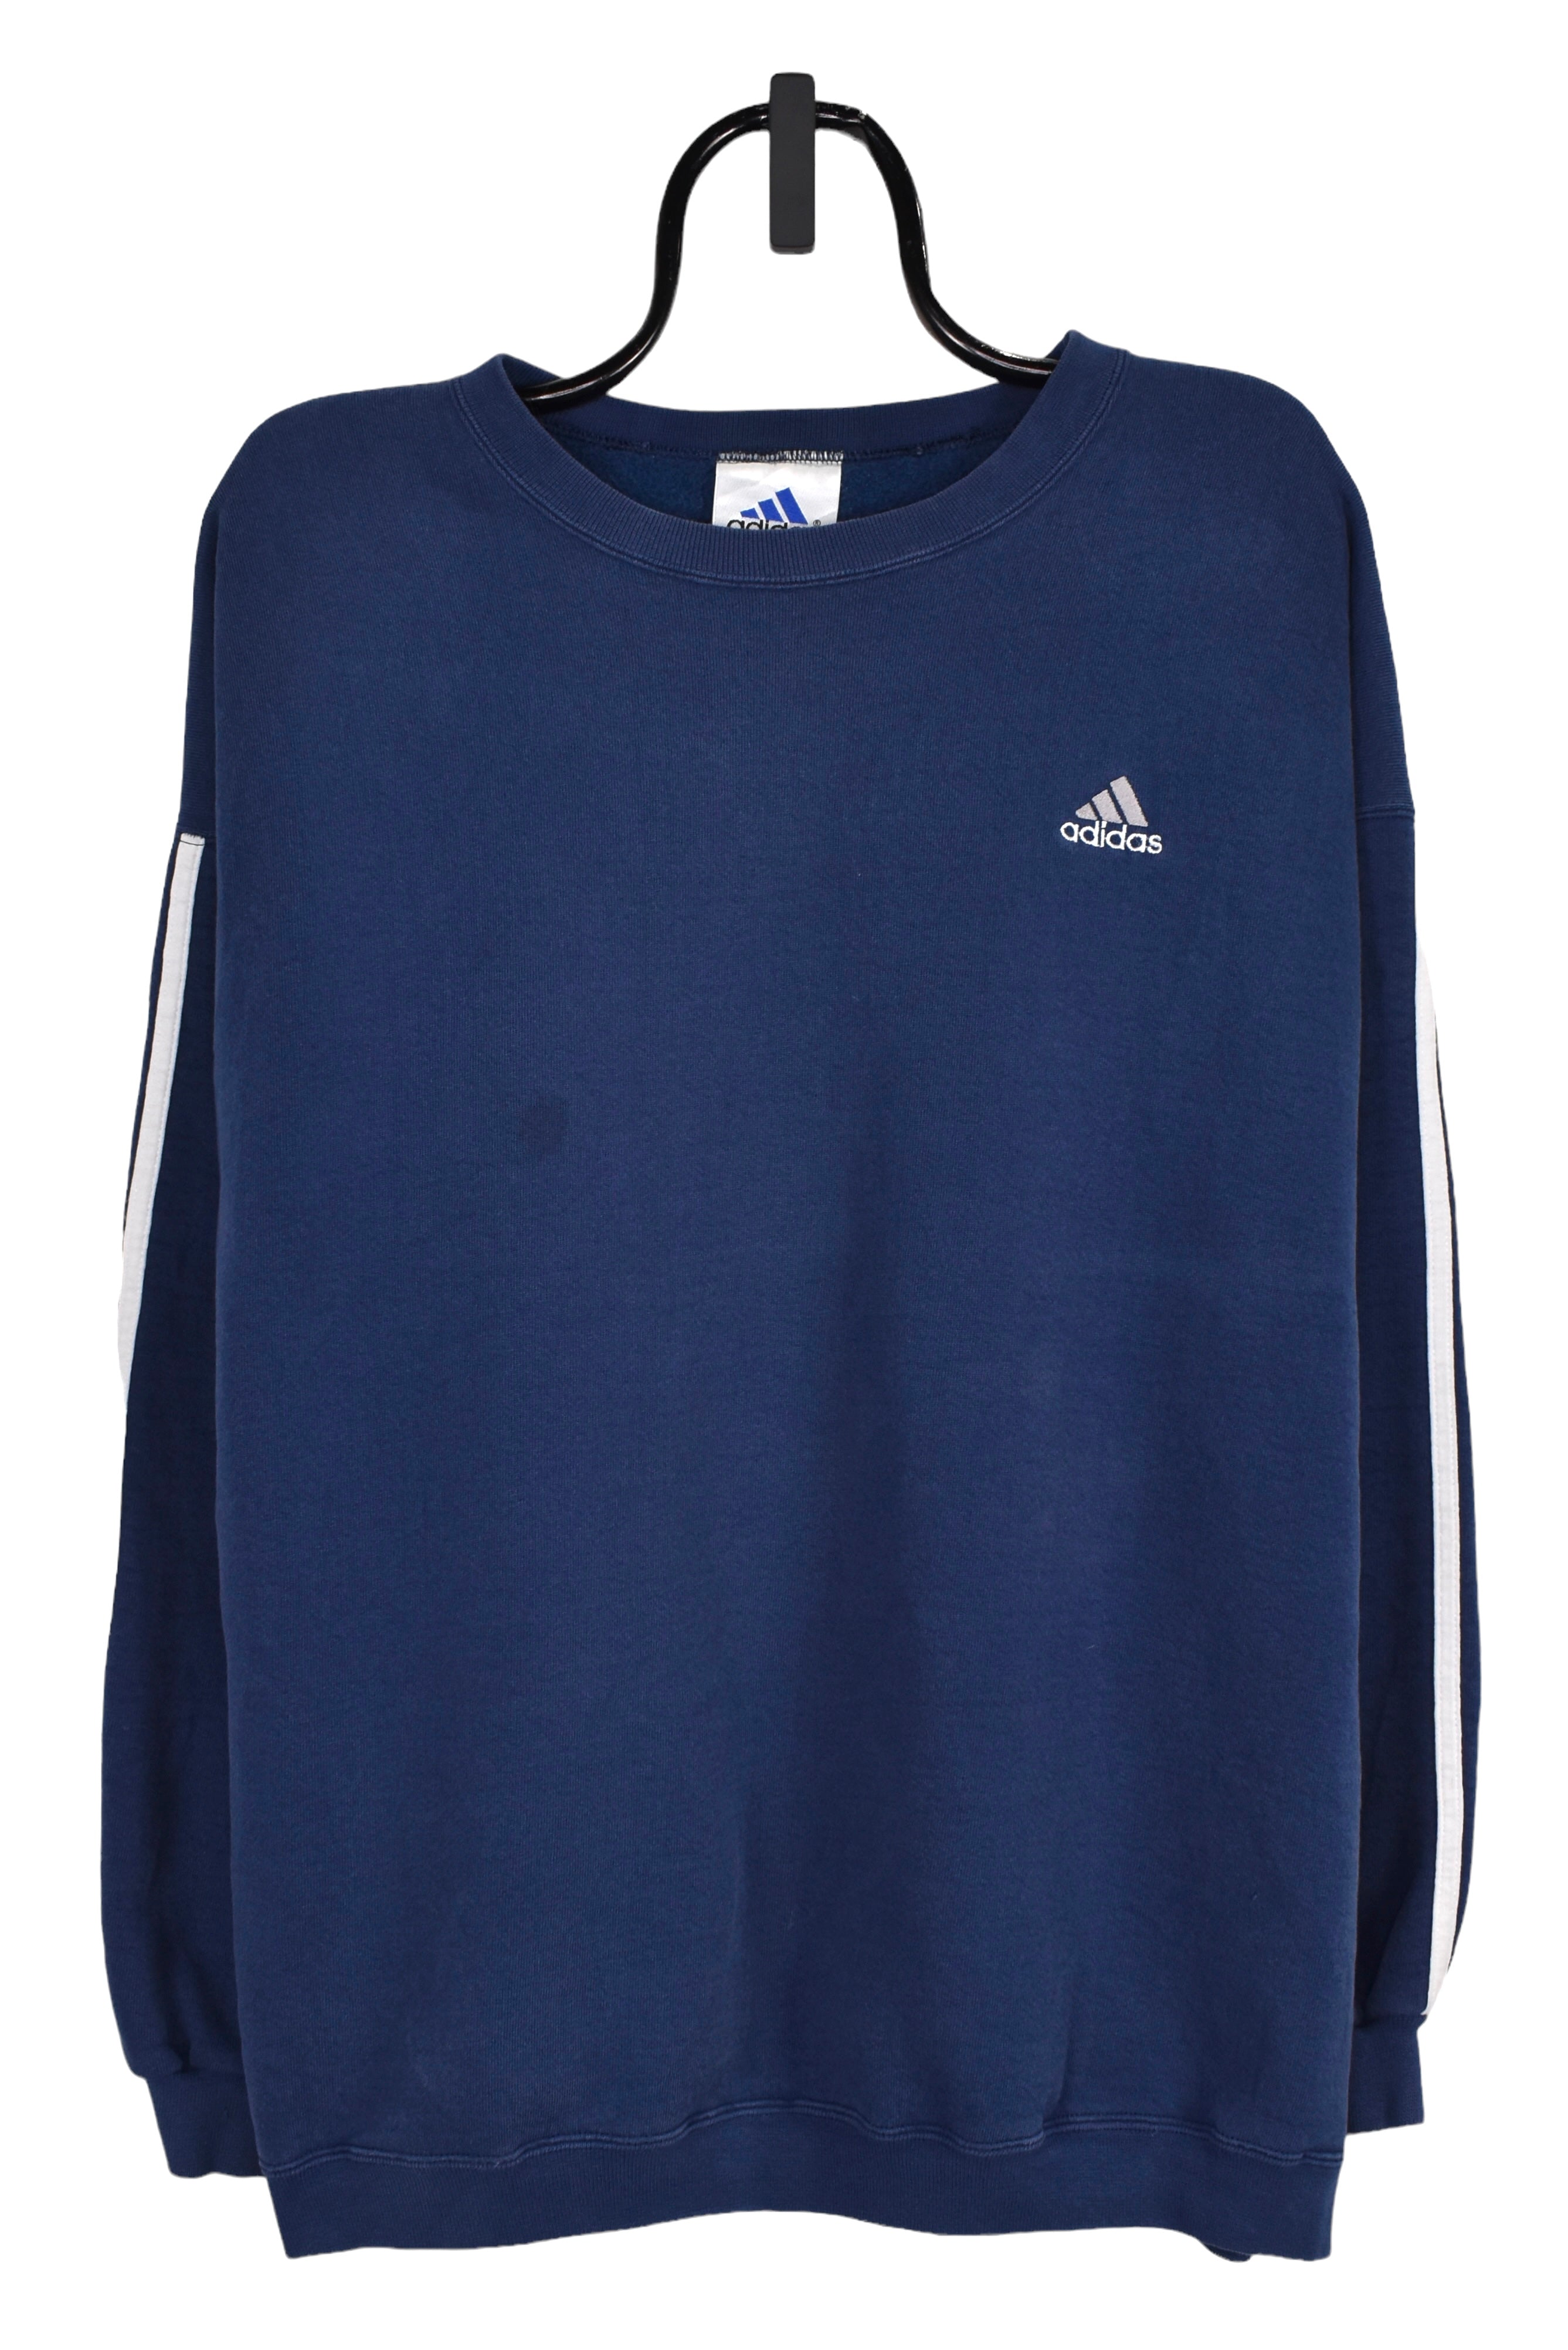 Vintage Adidas sweatshirt (2XL), navy embroidered crewneck